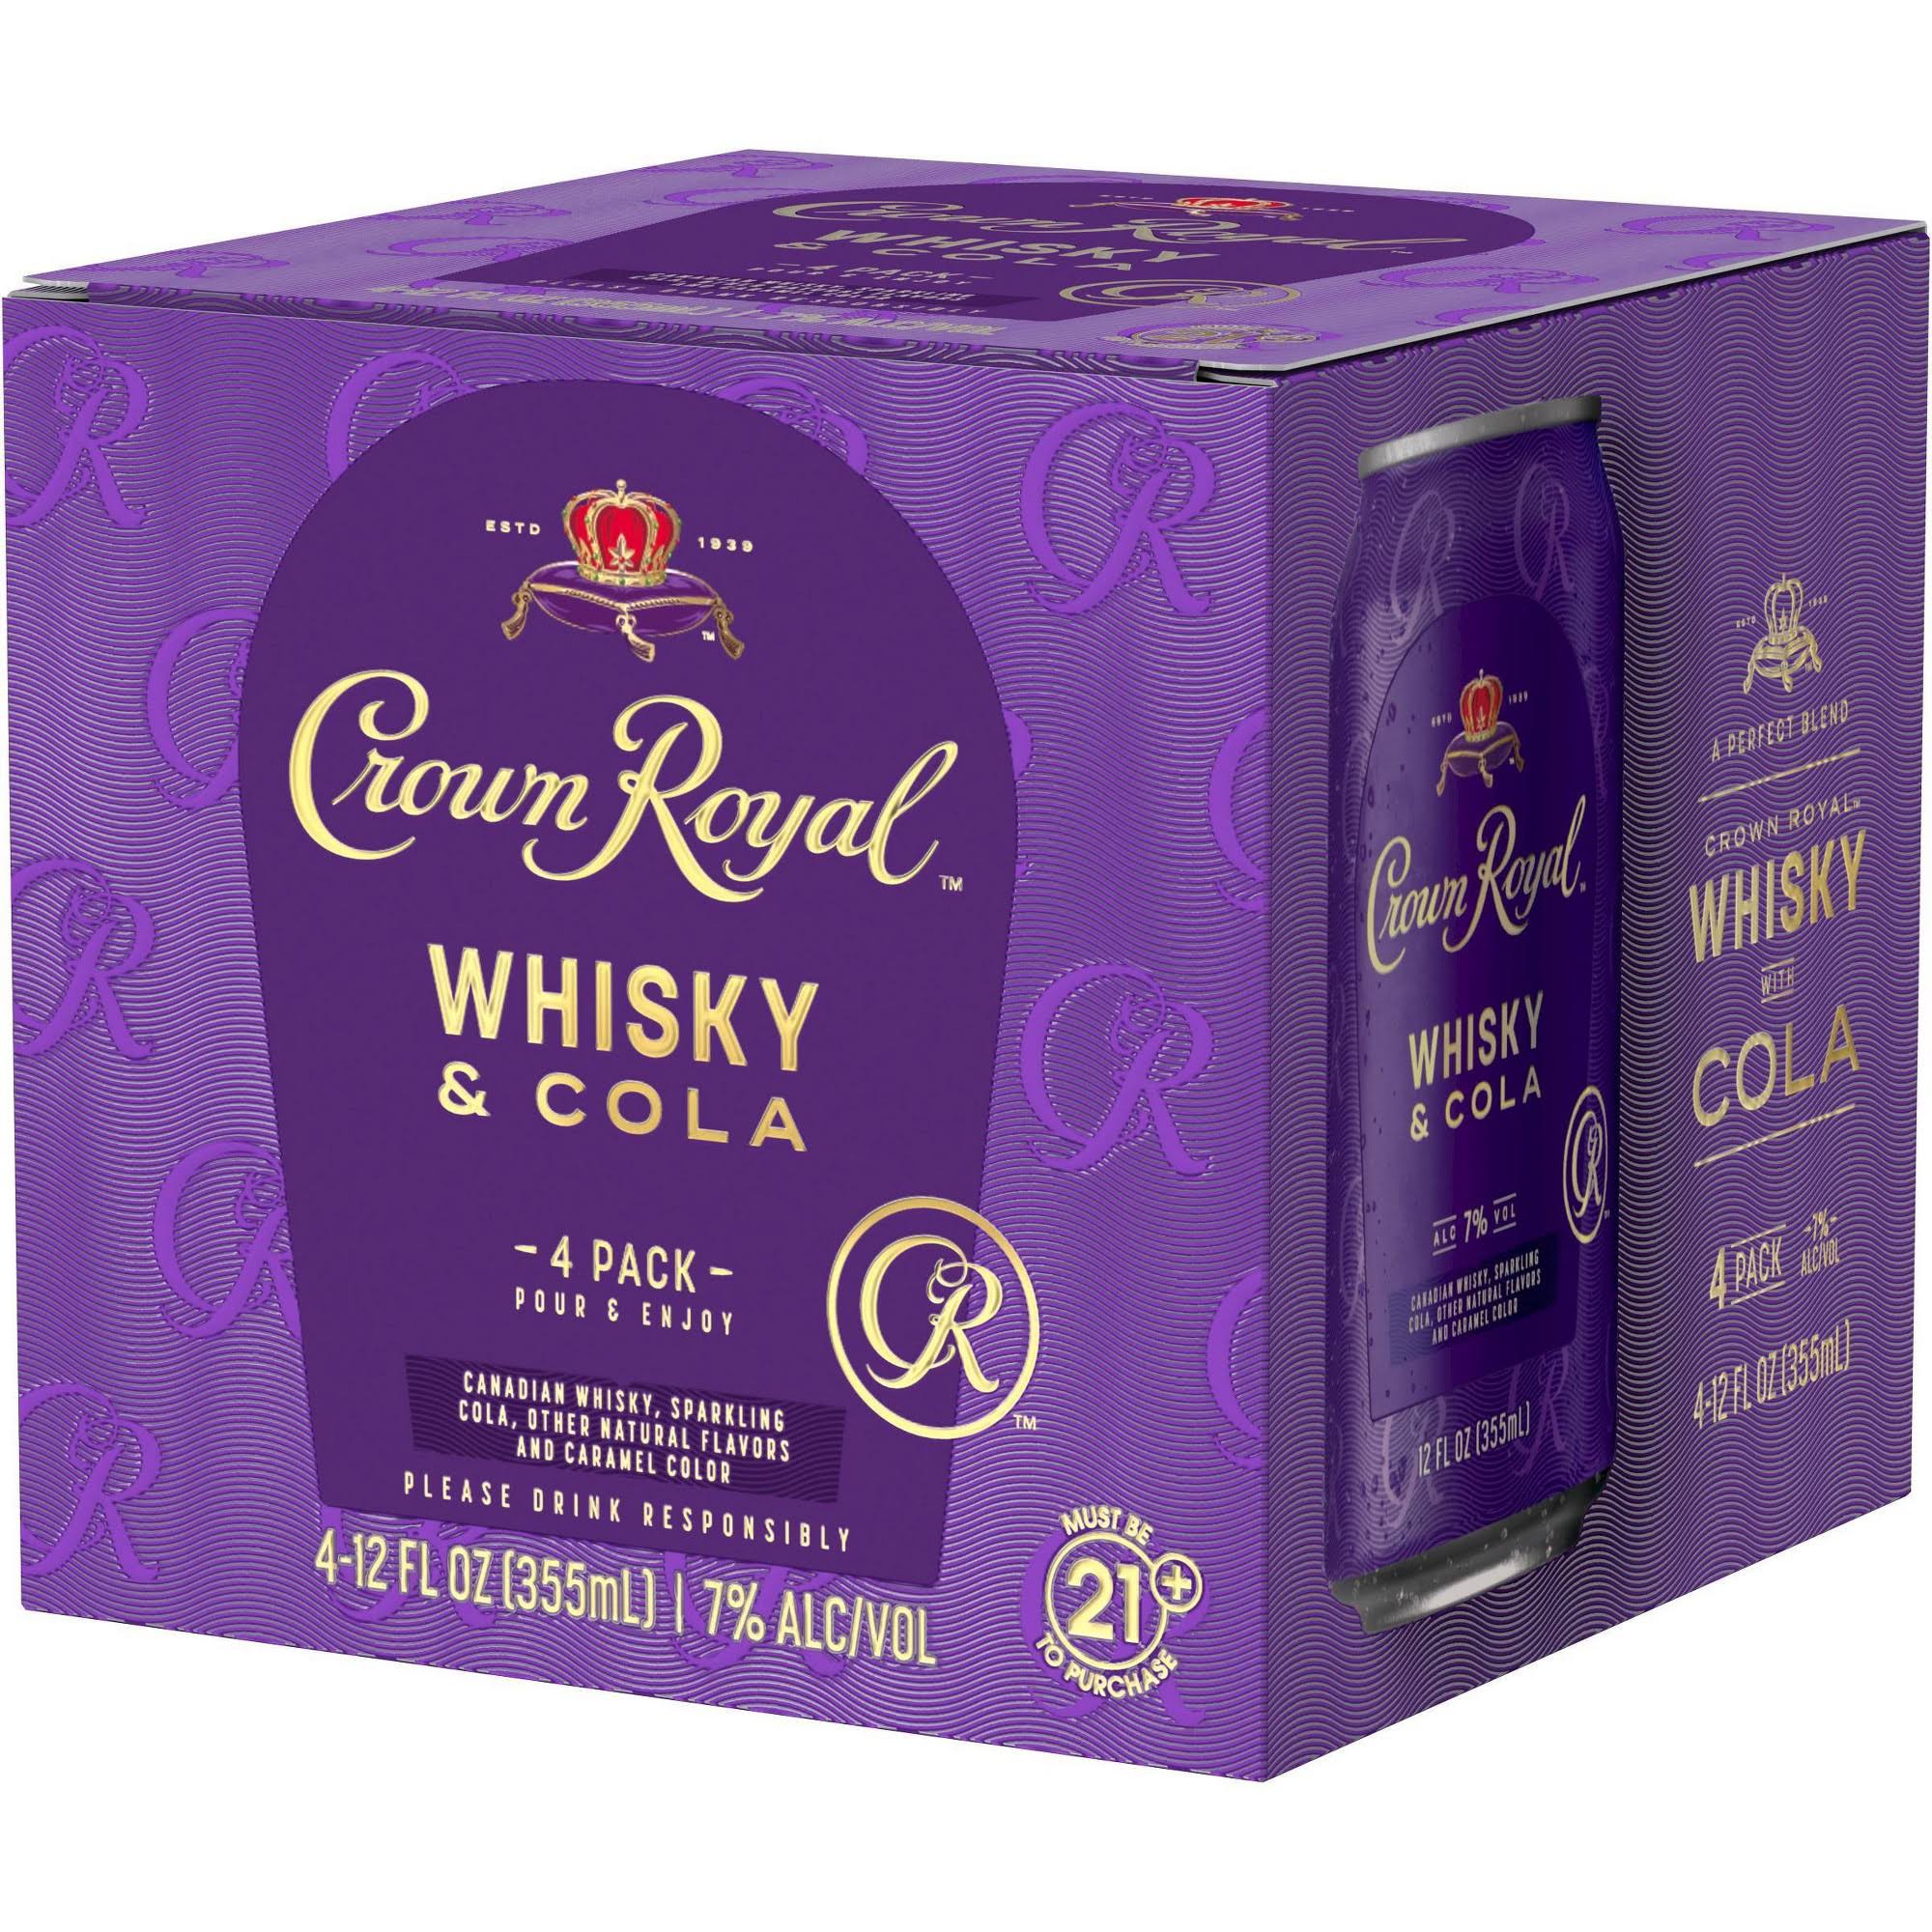 Crown Royal Whisky & Cola, 4 Pack - 4 pack, 12 fl oz cans